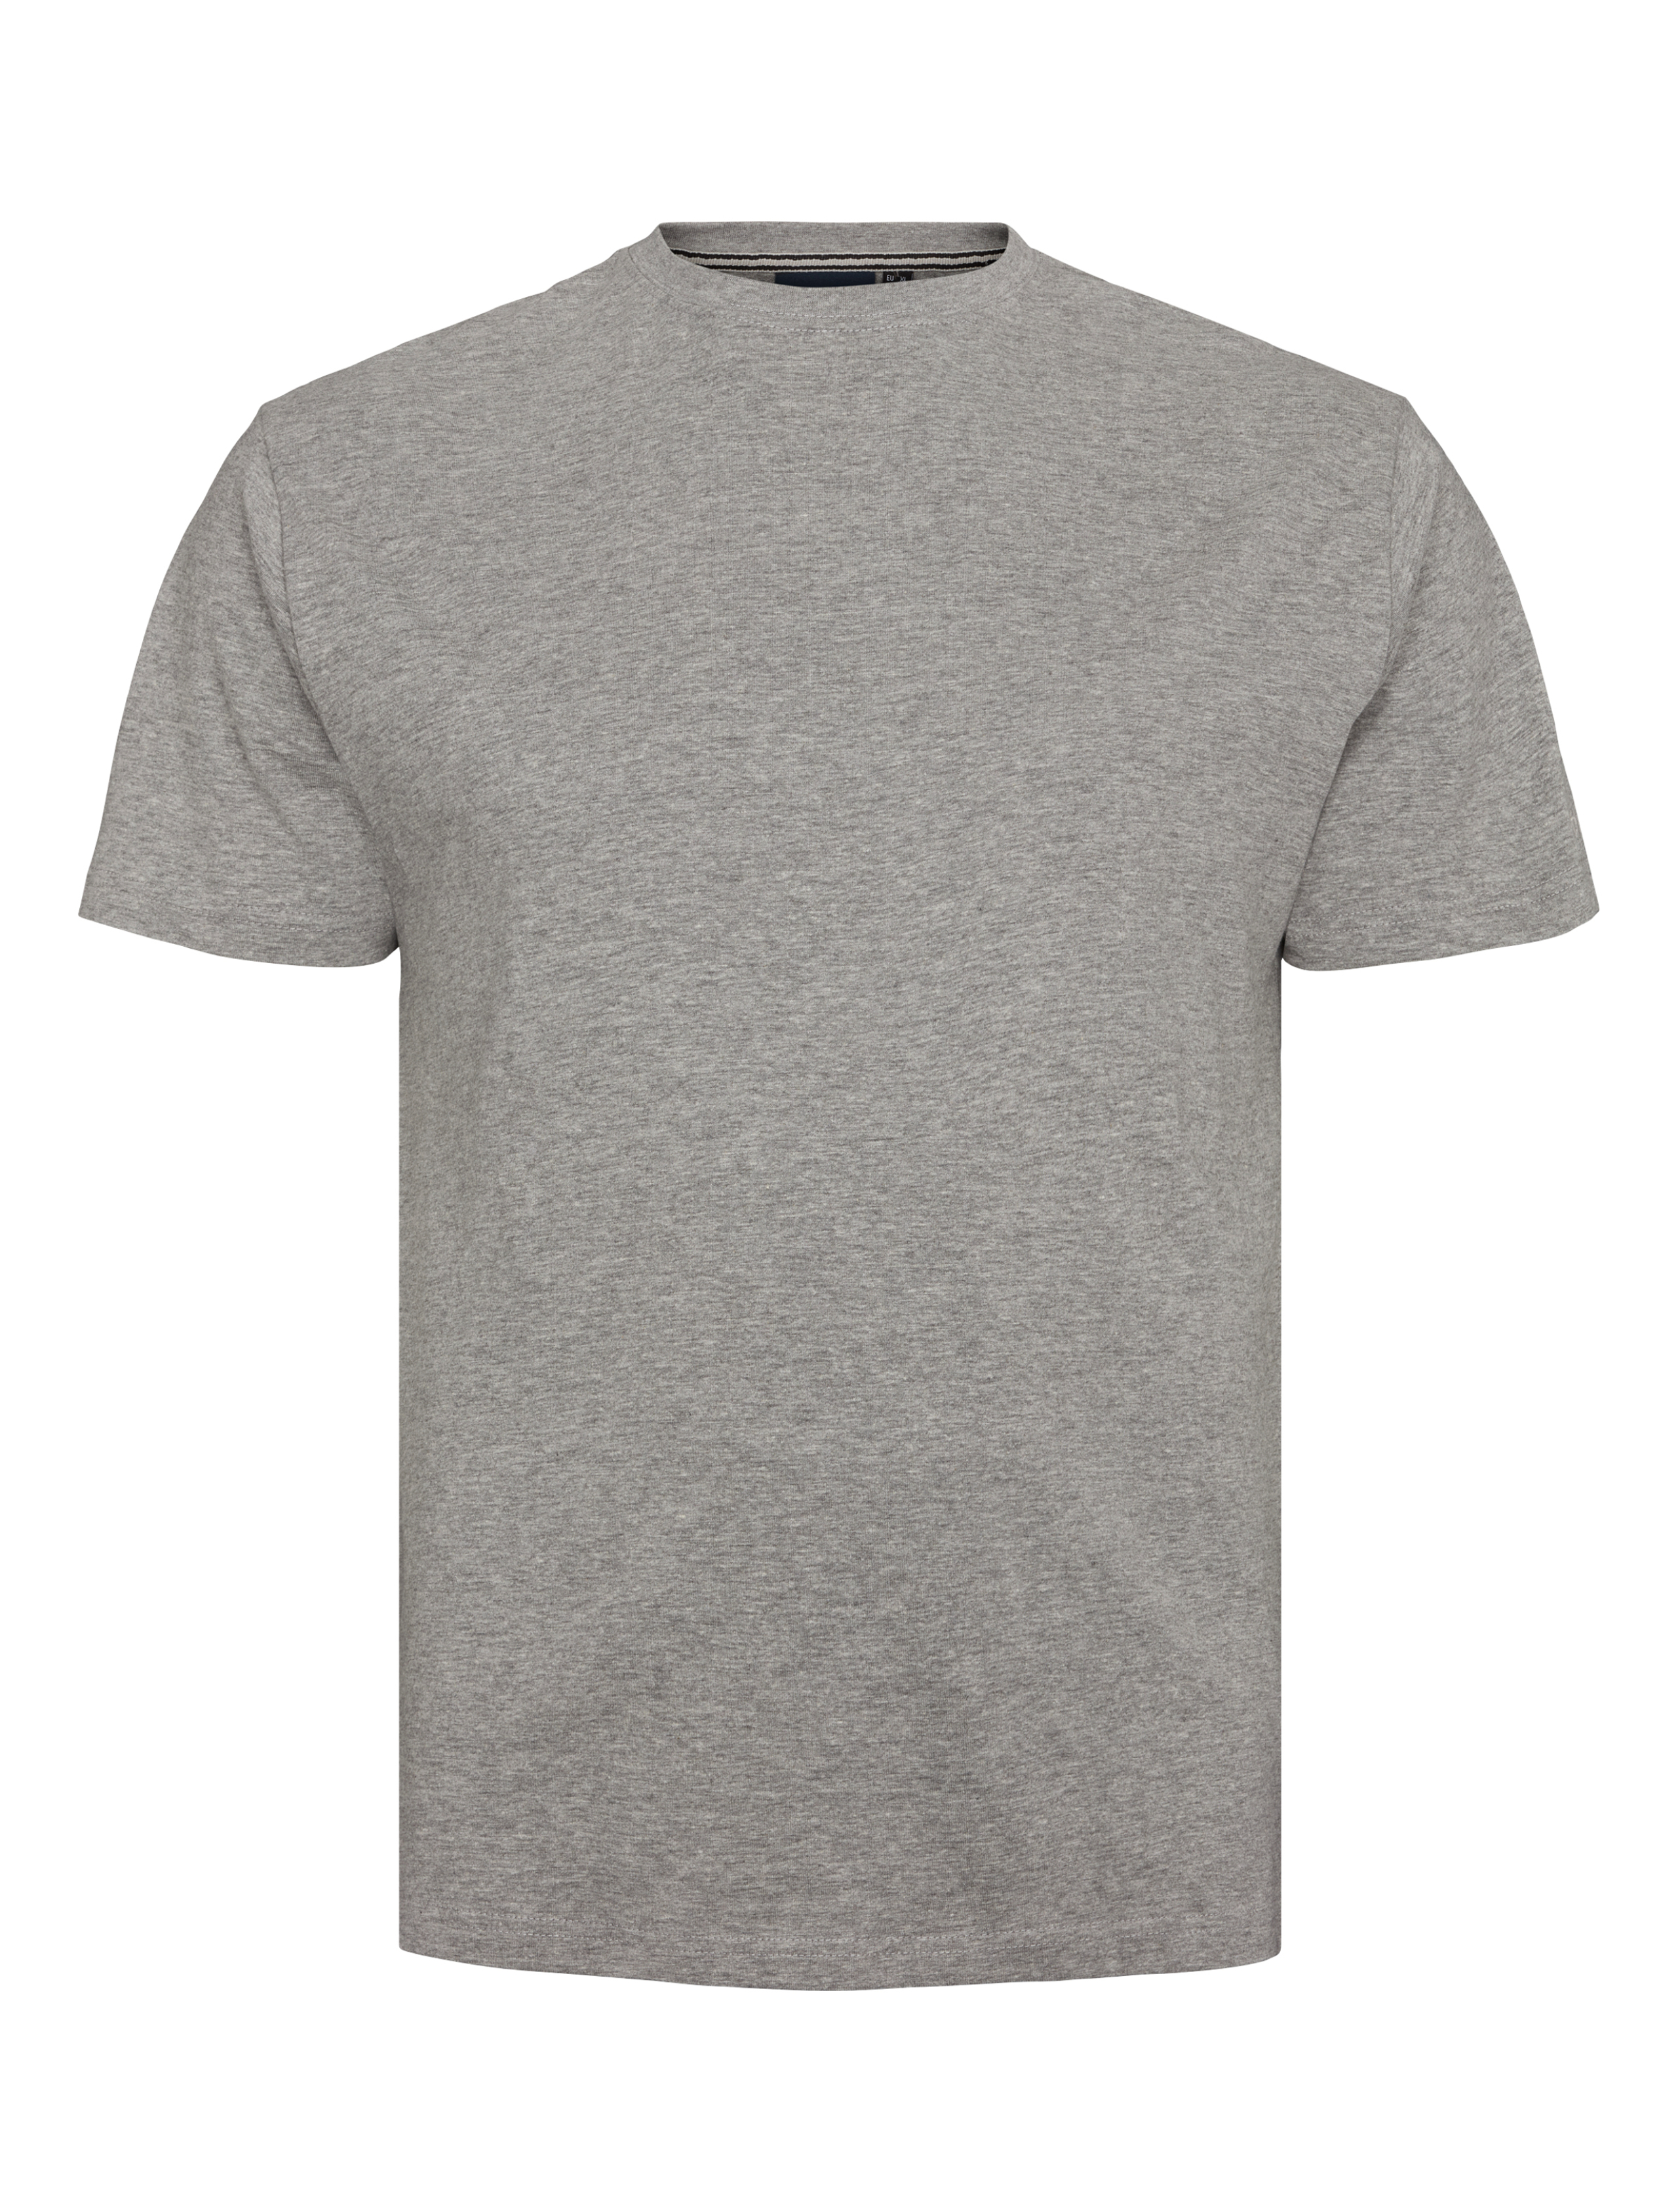 North T-shirt grå / 050 grey mel